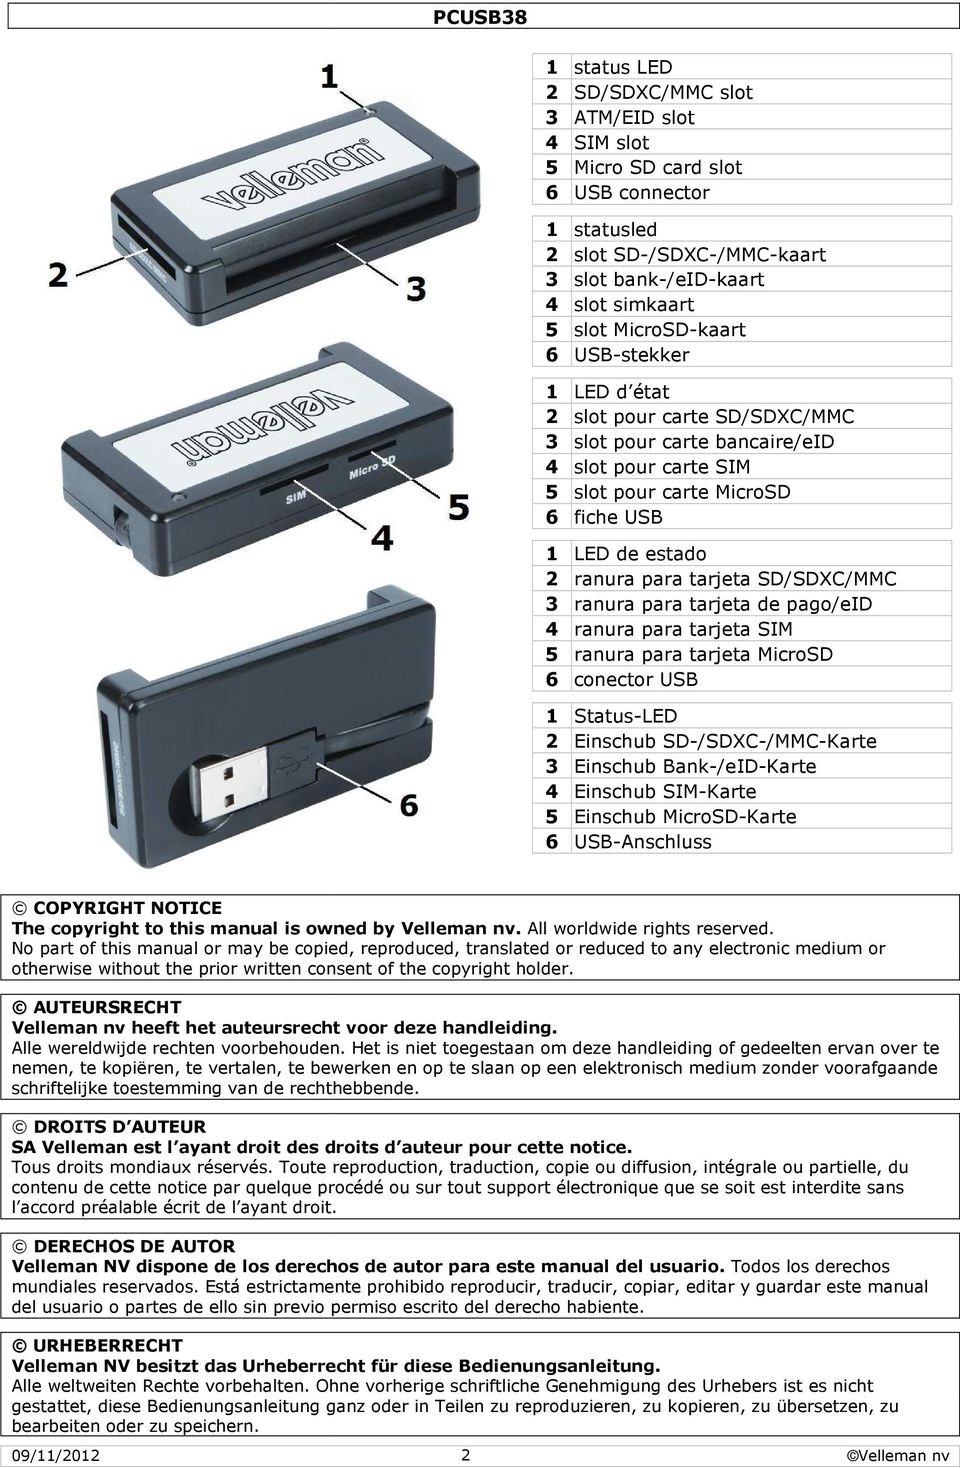 SD/SDXC/MMC 3 ranura para tarjeta de pago/eid 4 ranura para tarjeta SIM 5 ranura para tarjeta MicroSD 6 conector USB 1 Status-LED 2 Einschub SD-/SDXC-/MMC-Karte 3 Einschub Bank-/eID-Karte 4 Einschub